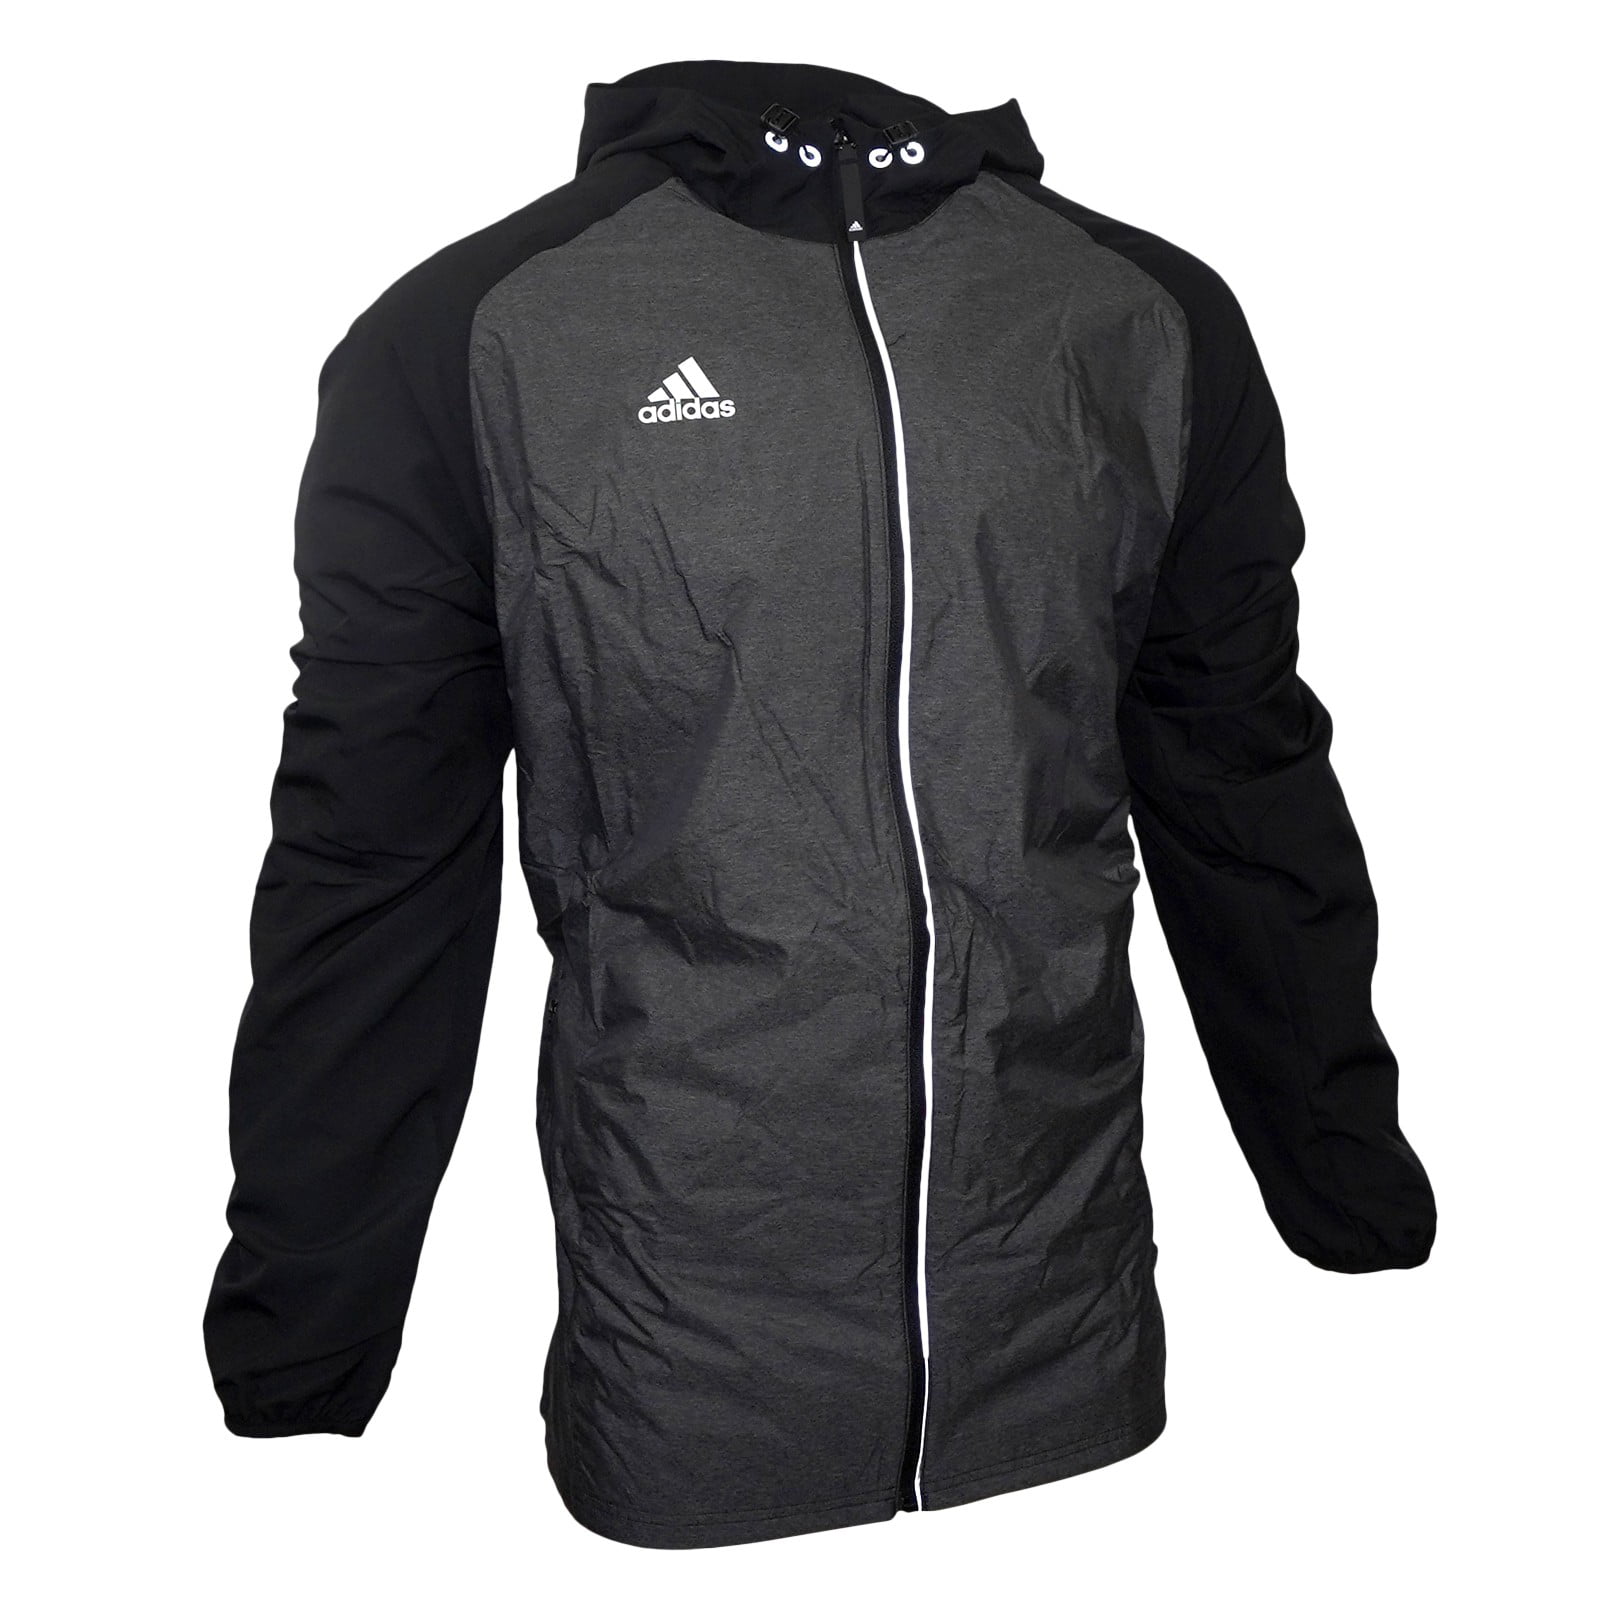 Adidas zip jacket